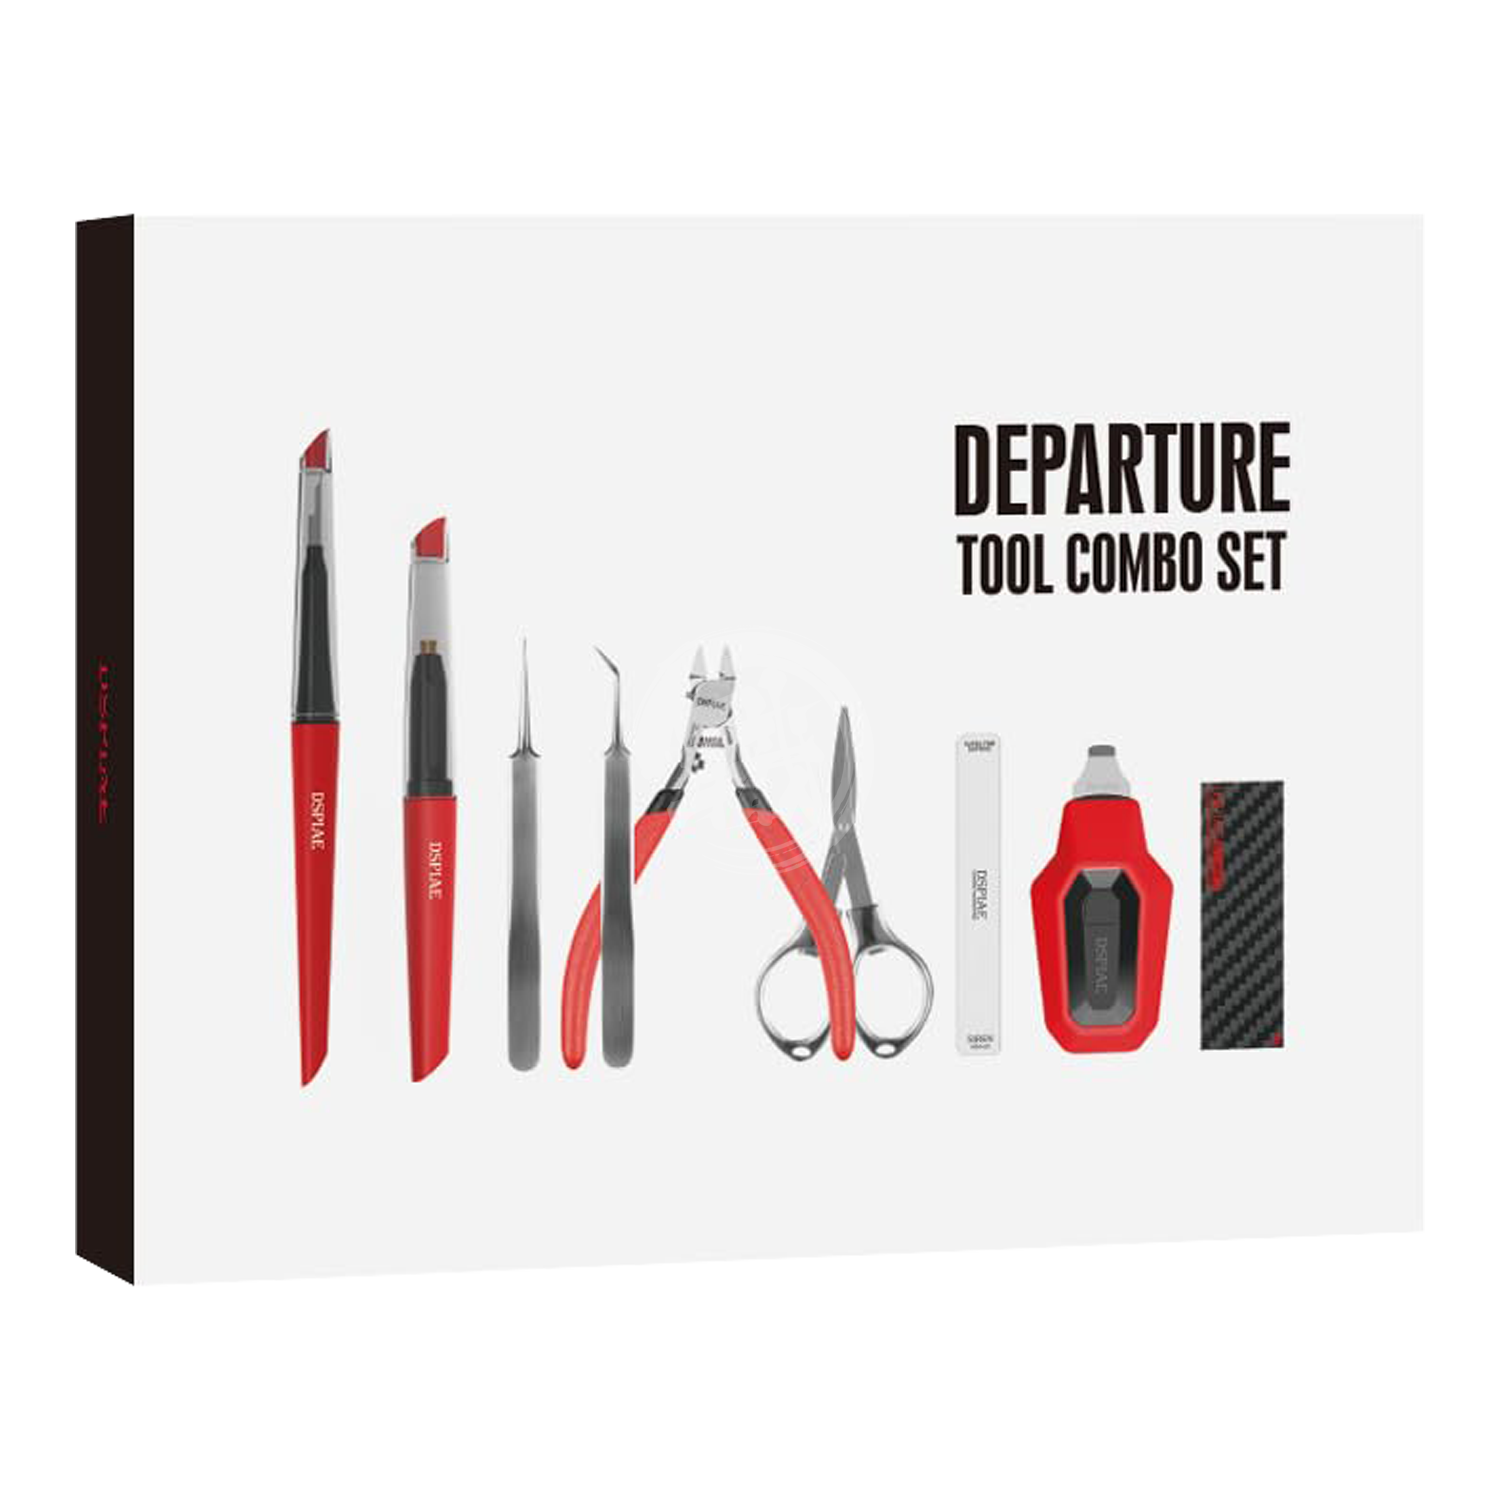 DSPIAE - Departure Tool Set - ShokuninGunpla